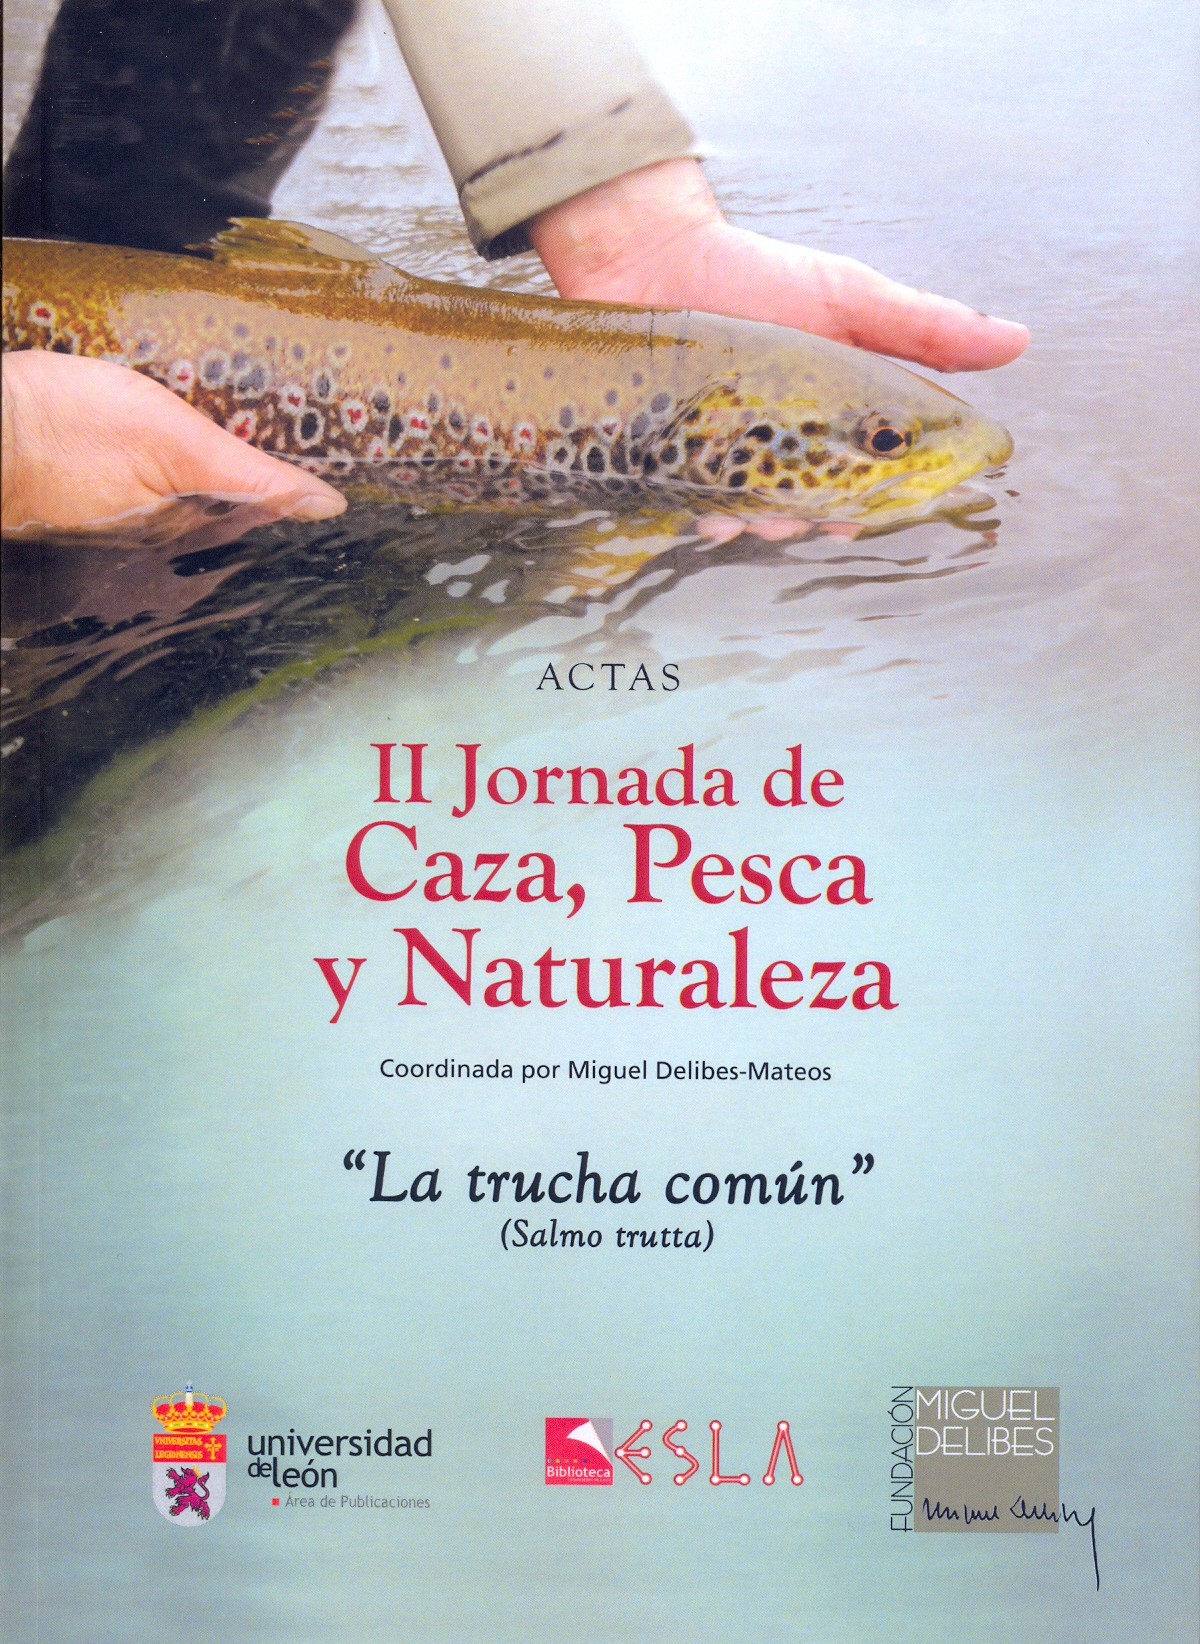 Imagen de portada del libro II Jornada de Caza, Pesca y Naturaleza "La trucha común" (Salmo trutta)